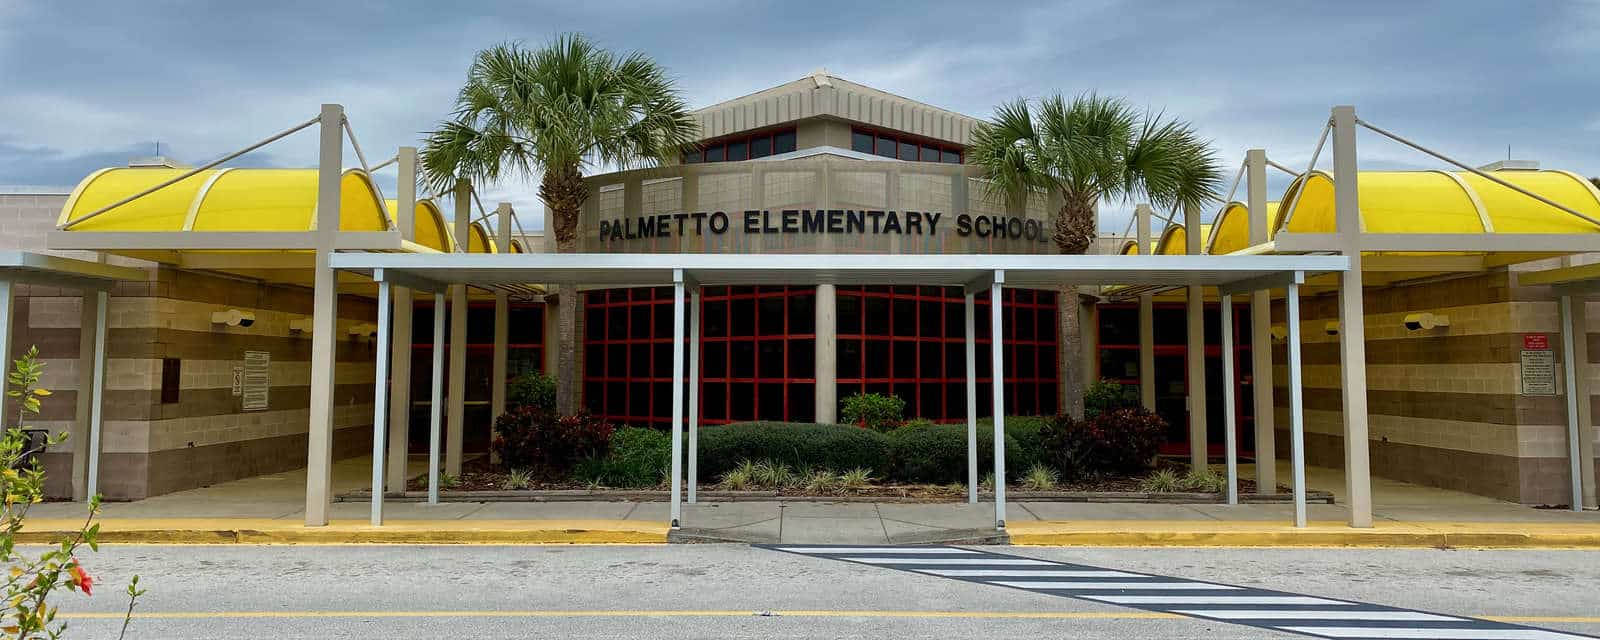 Palmetto Elementary School